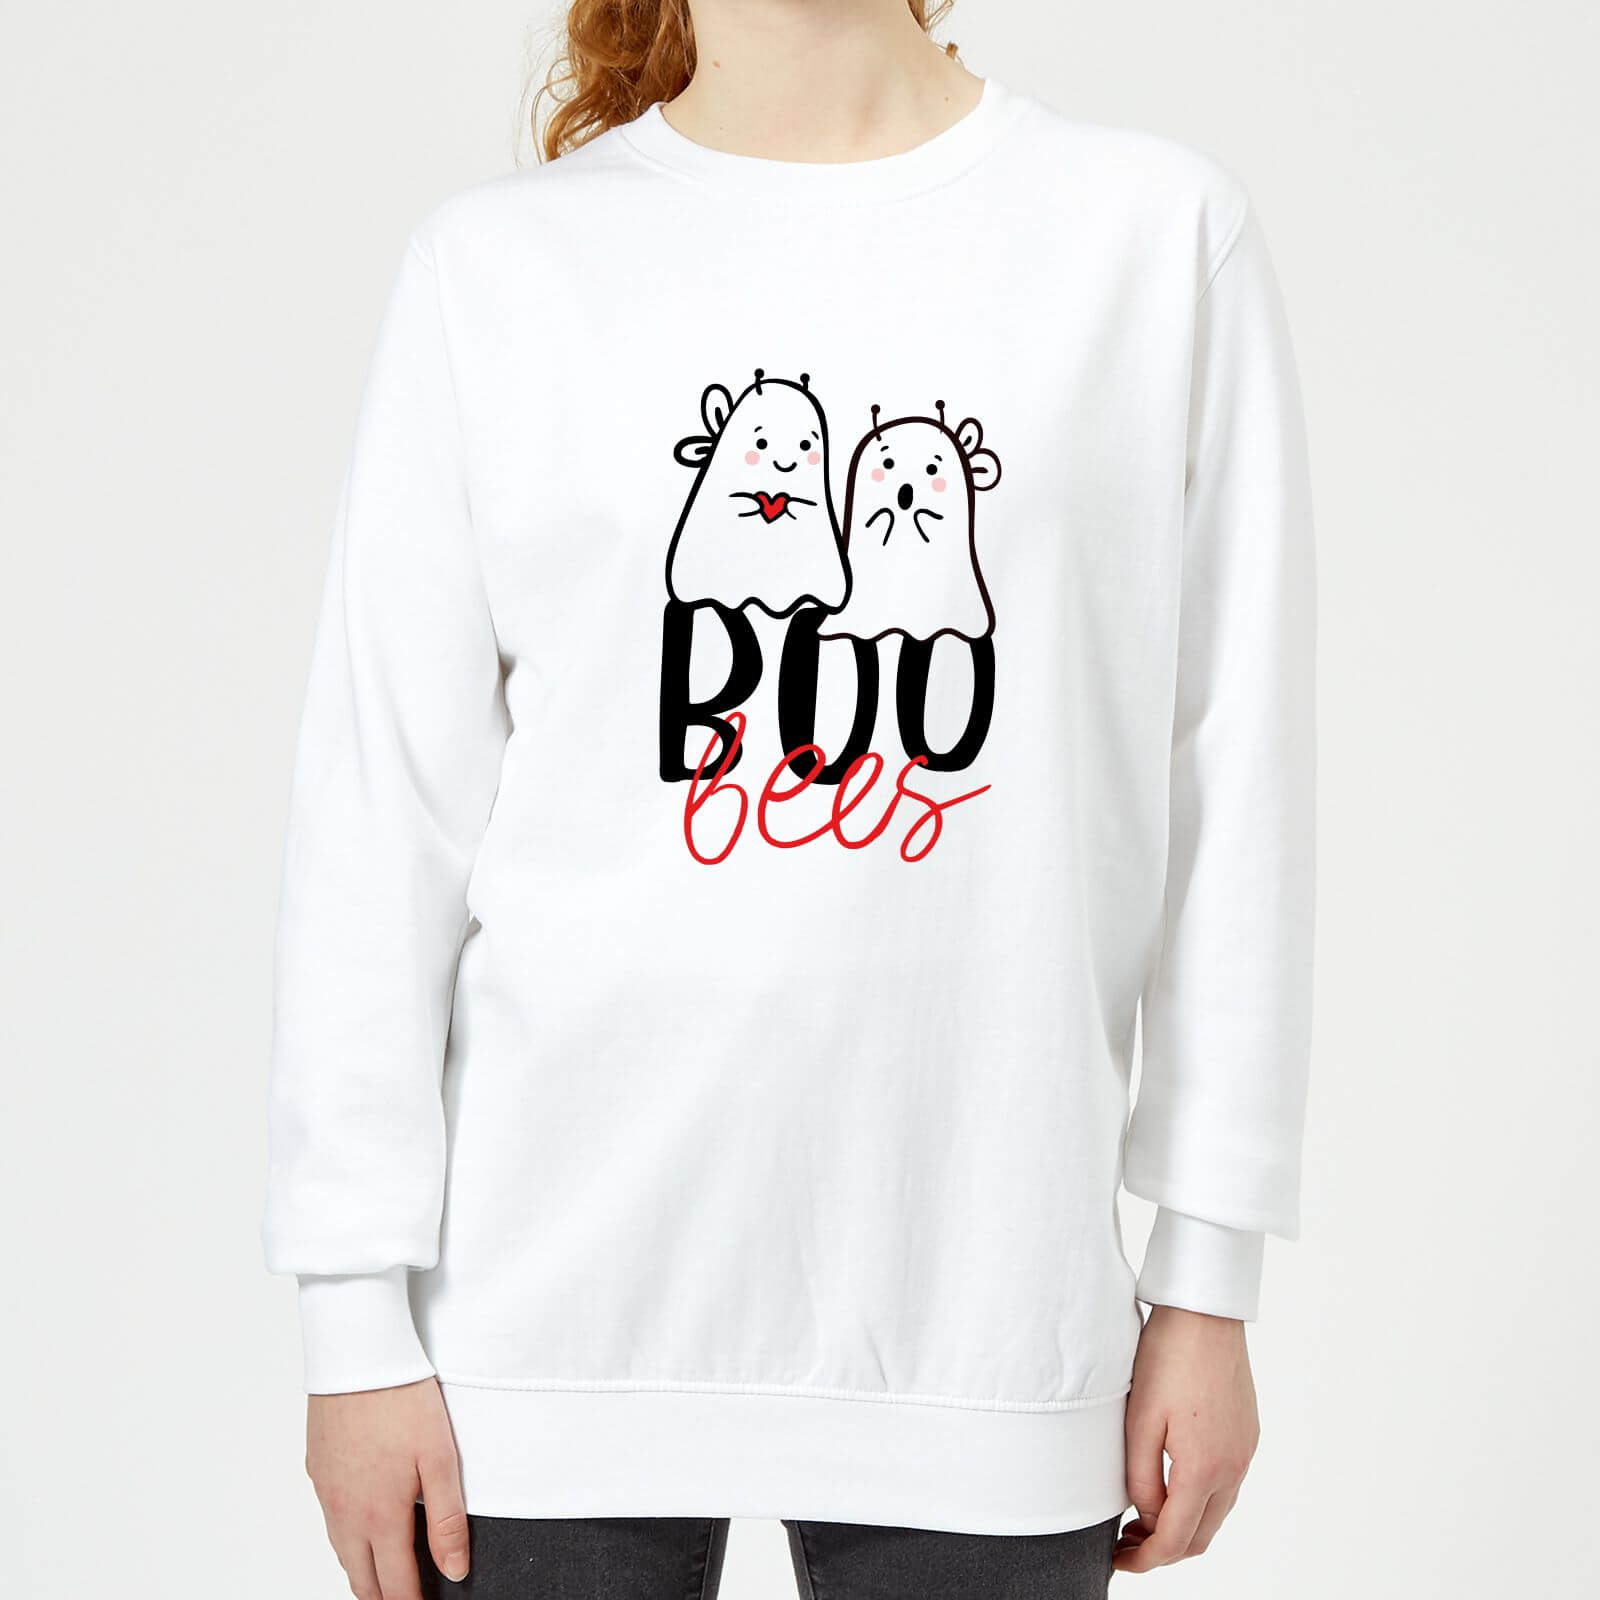 Boo Bies Women's Sweatshirt - White - XL - White